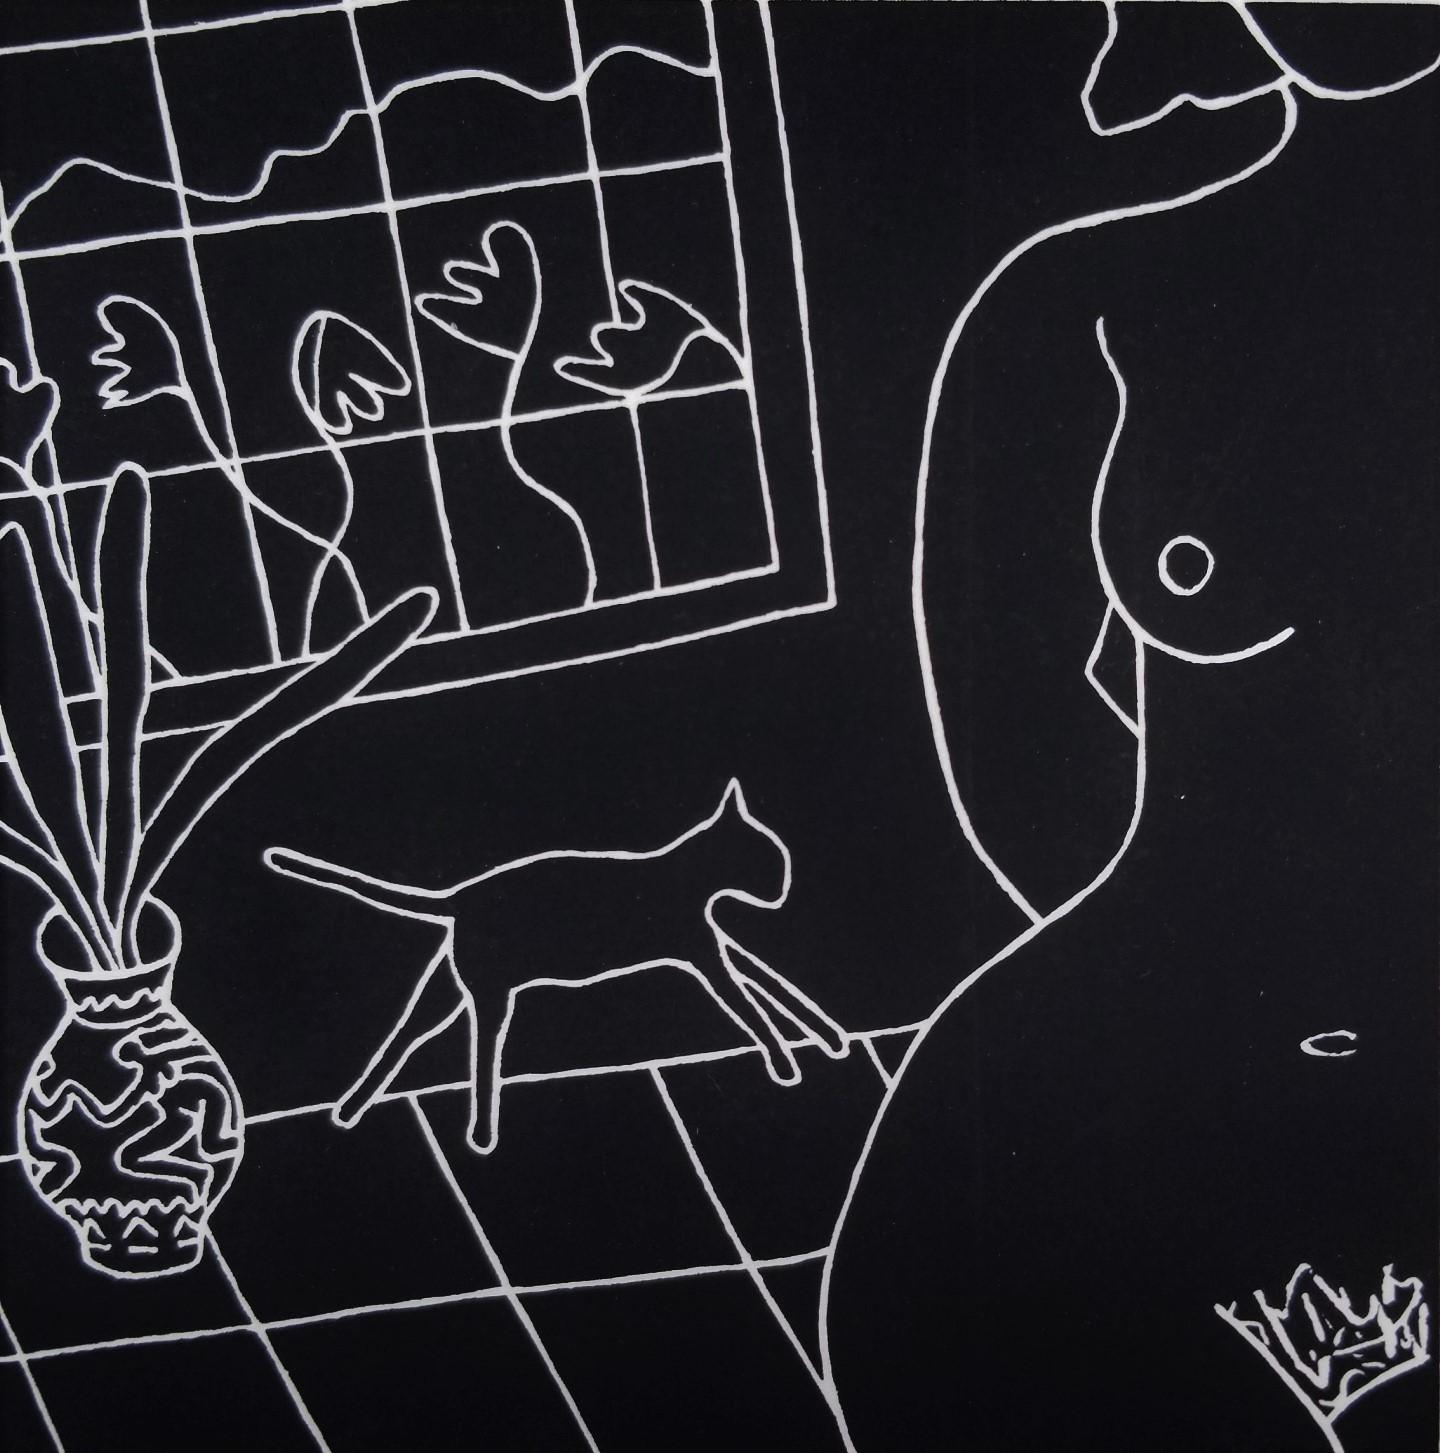 Dan May Nude Print - Nude and Cat /// Contemporary Street Screenprint Figurative Black and White Art